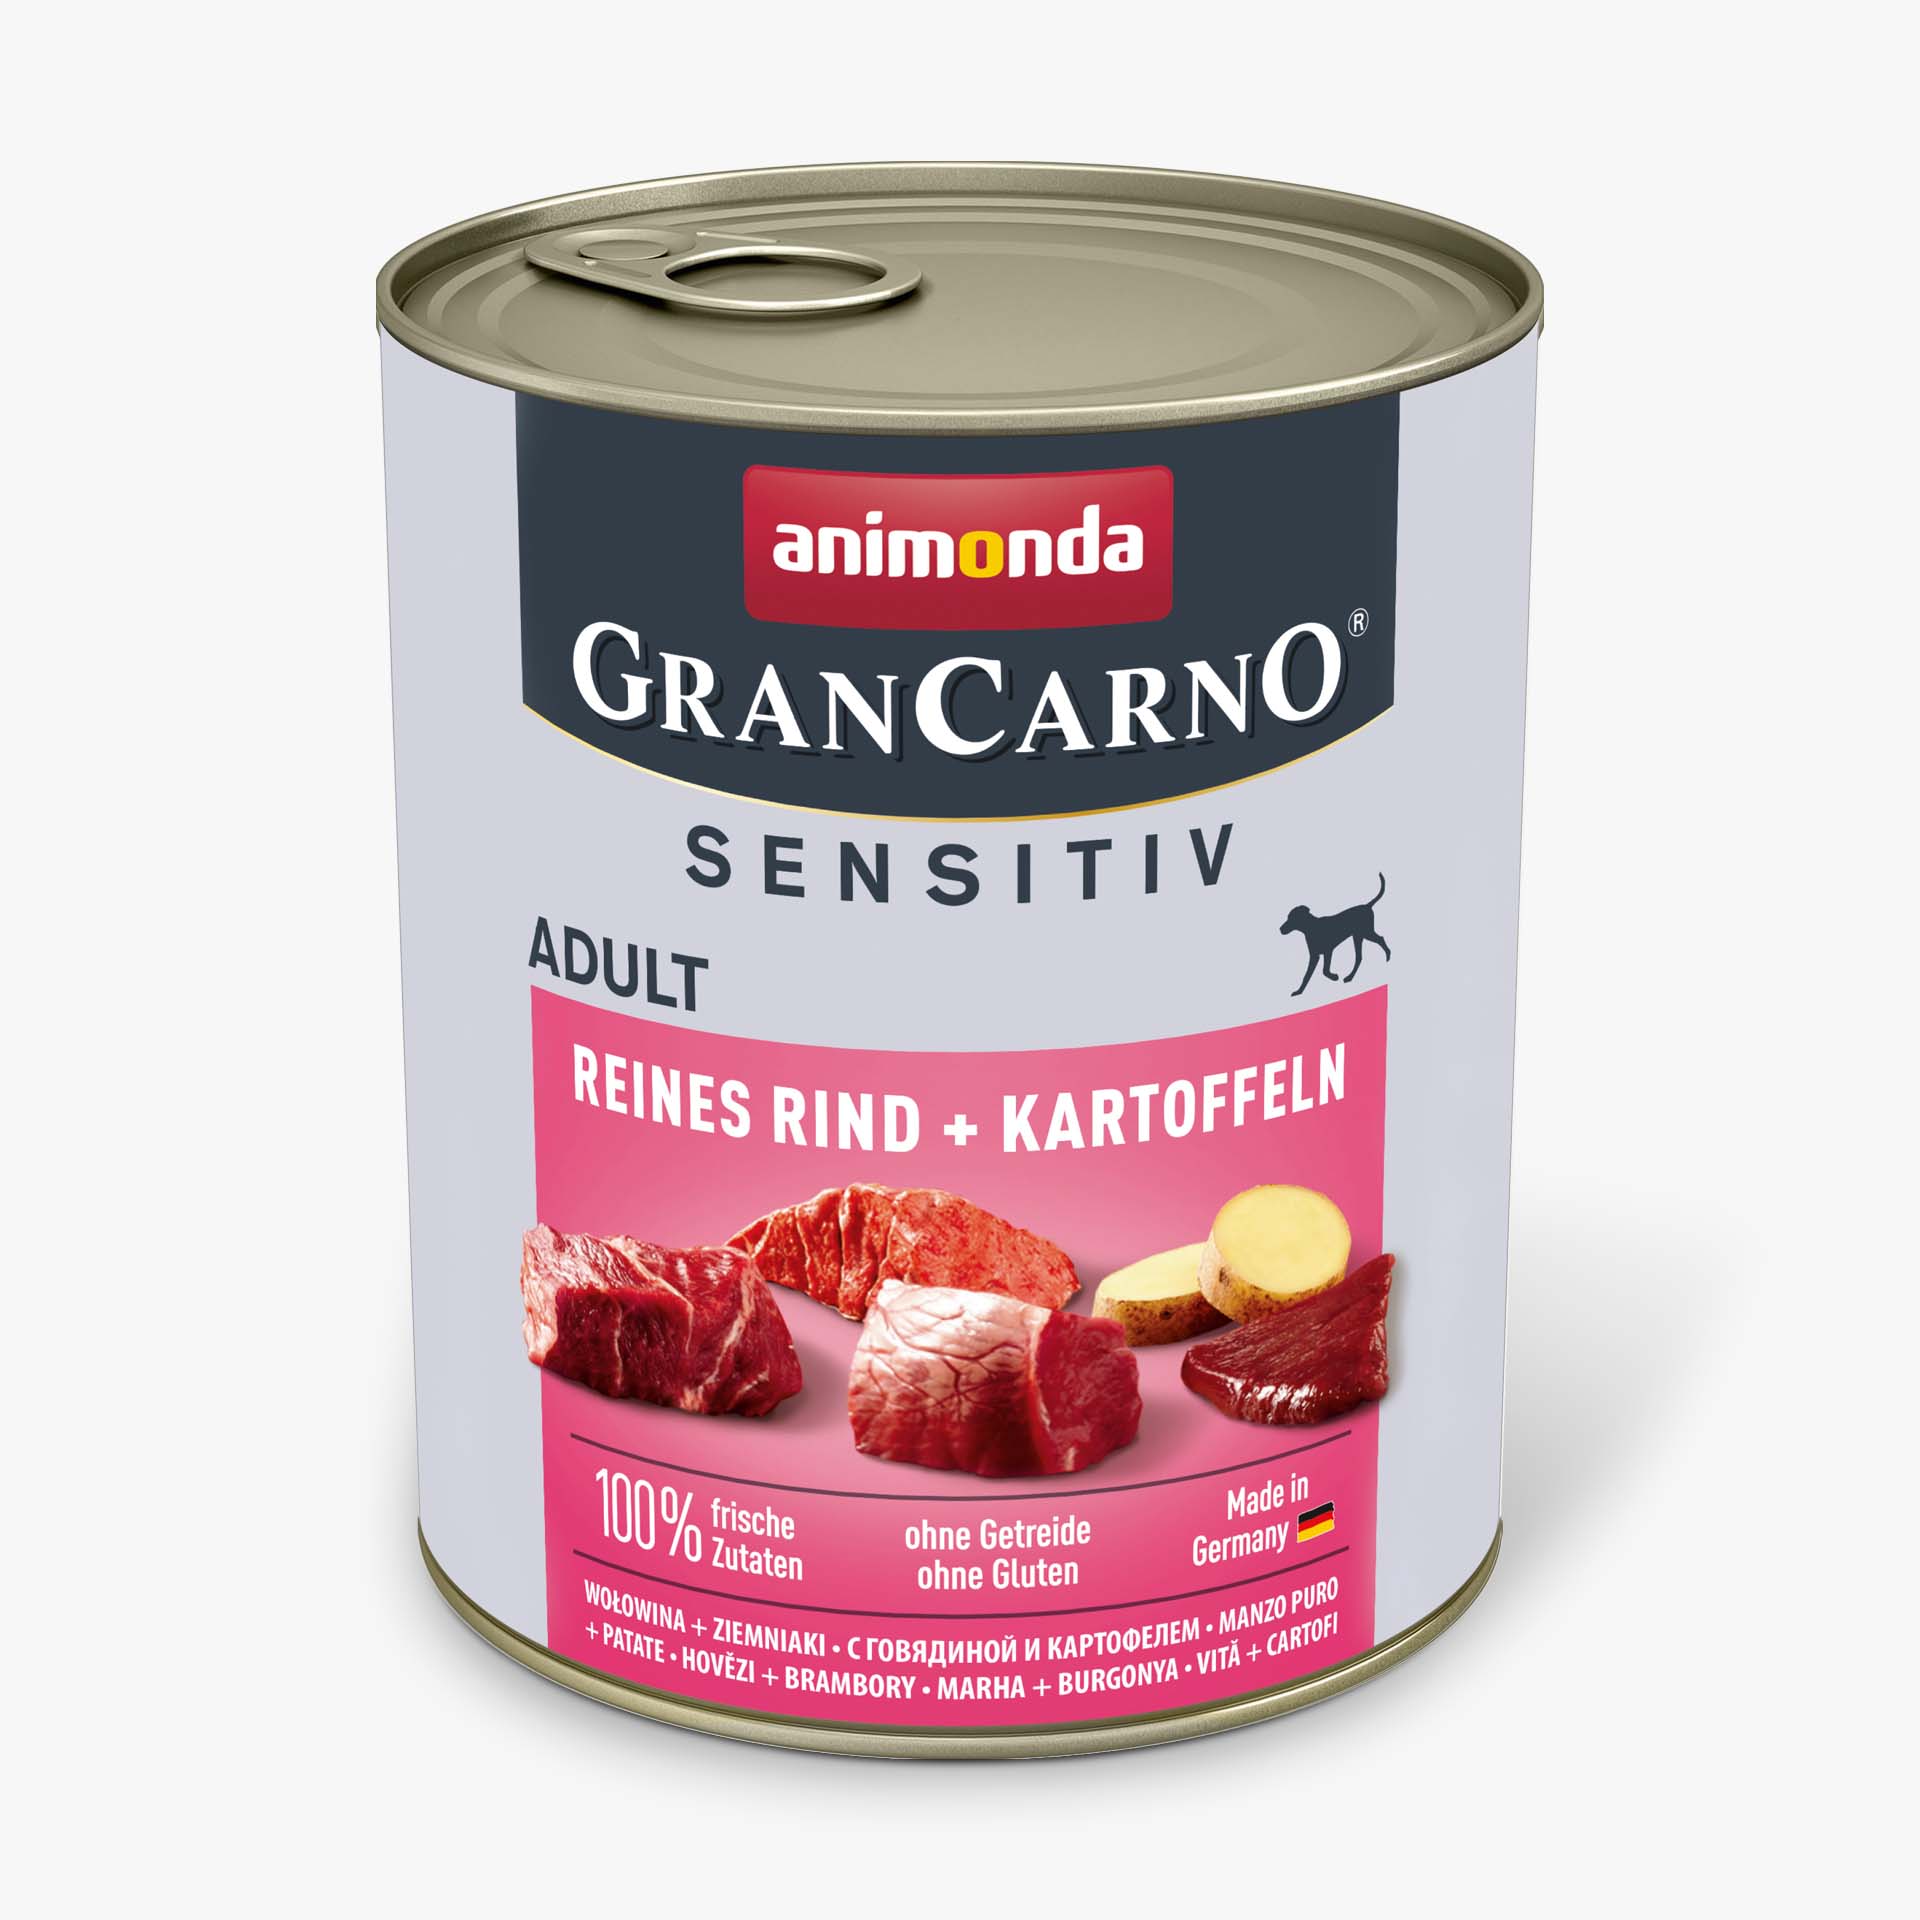 GranCarno pure beef + potatoes Sensitiv